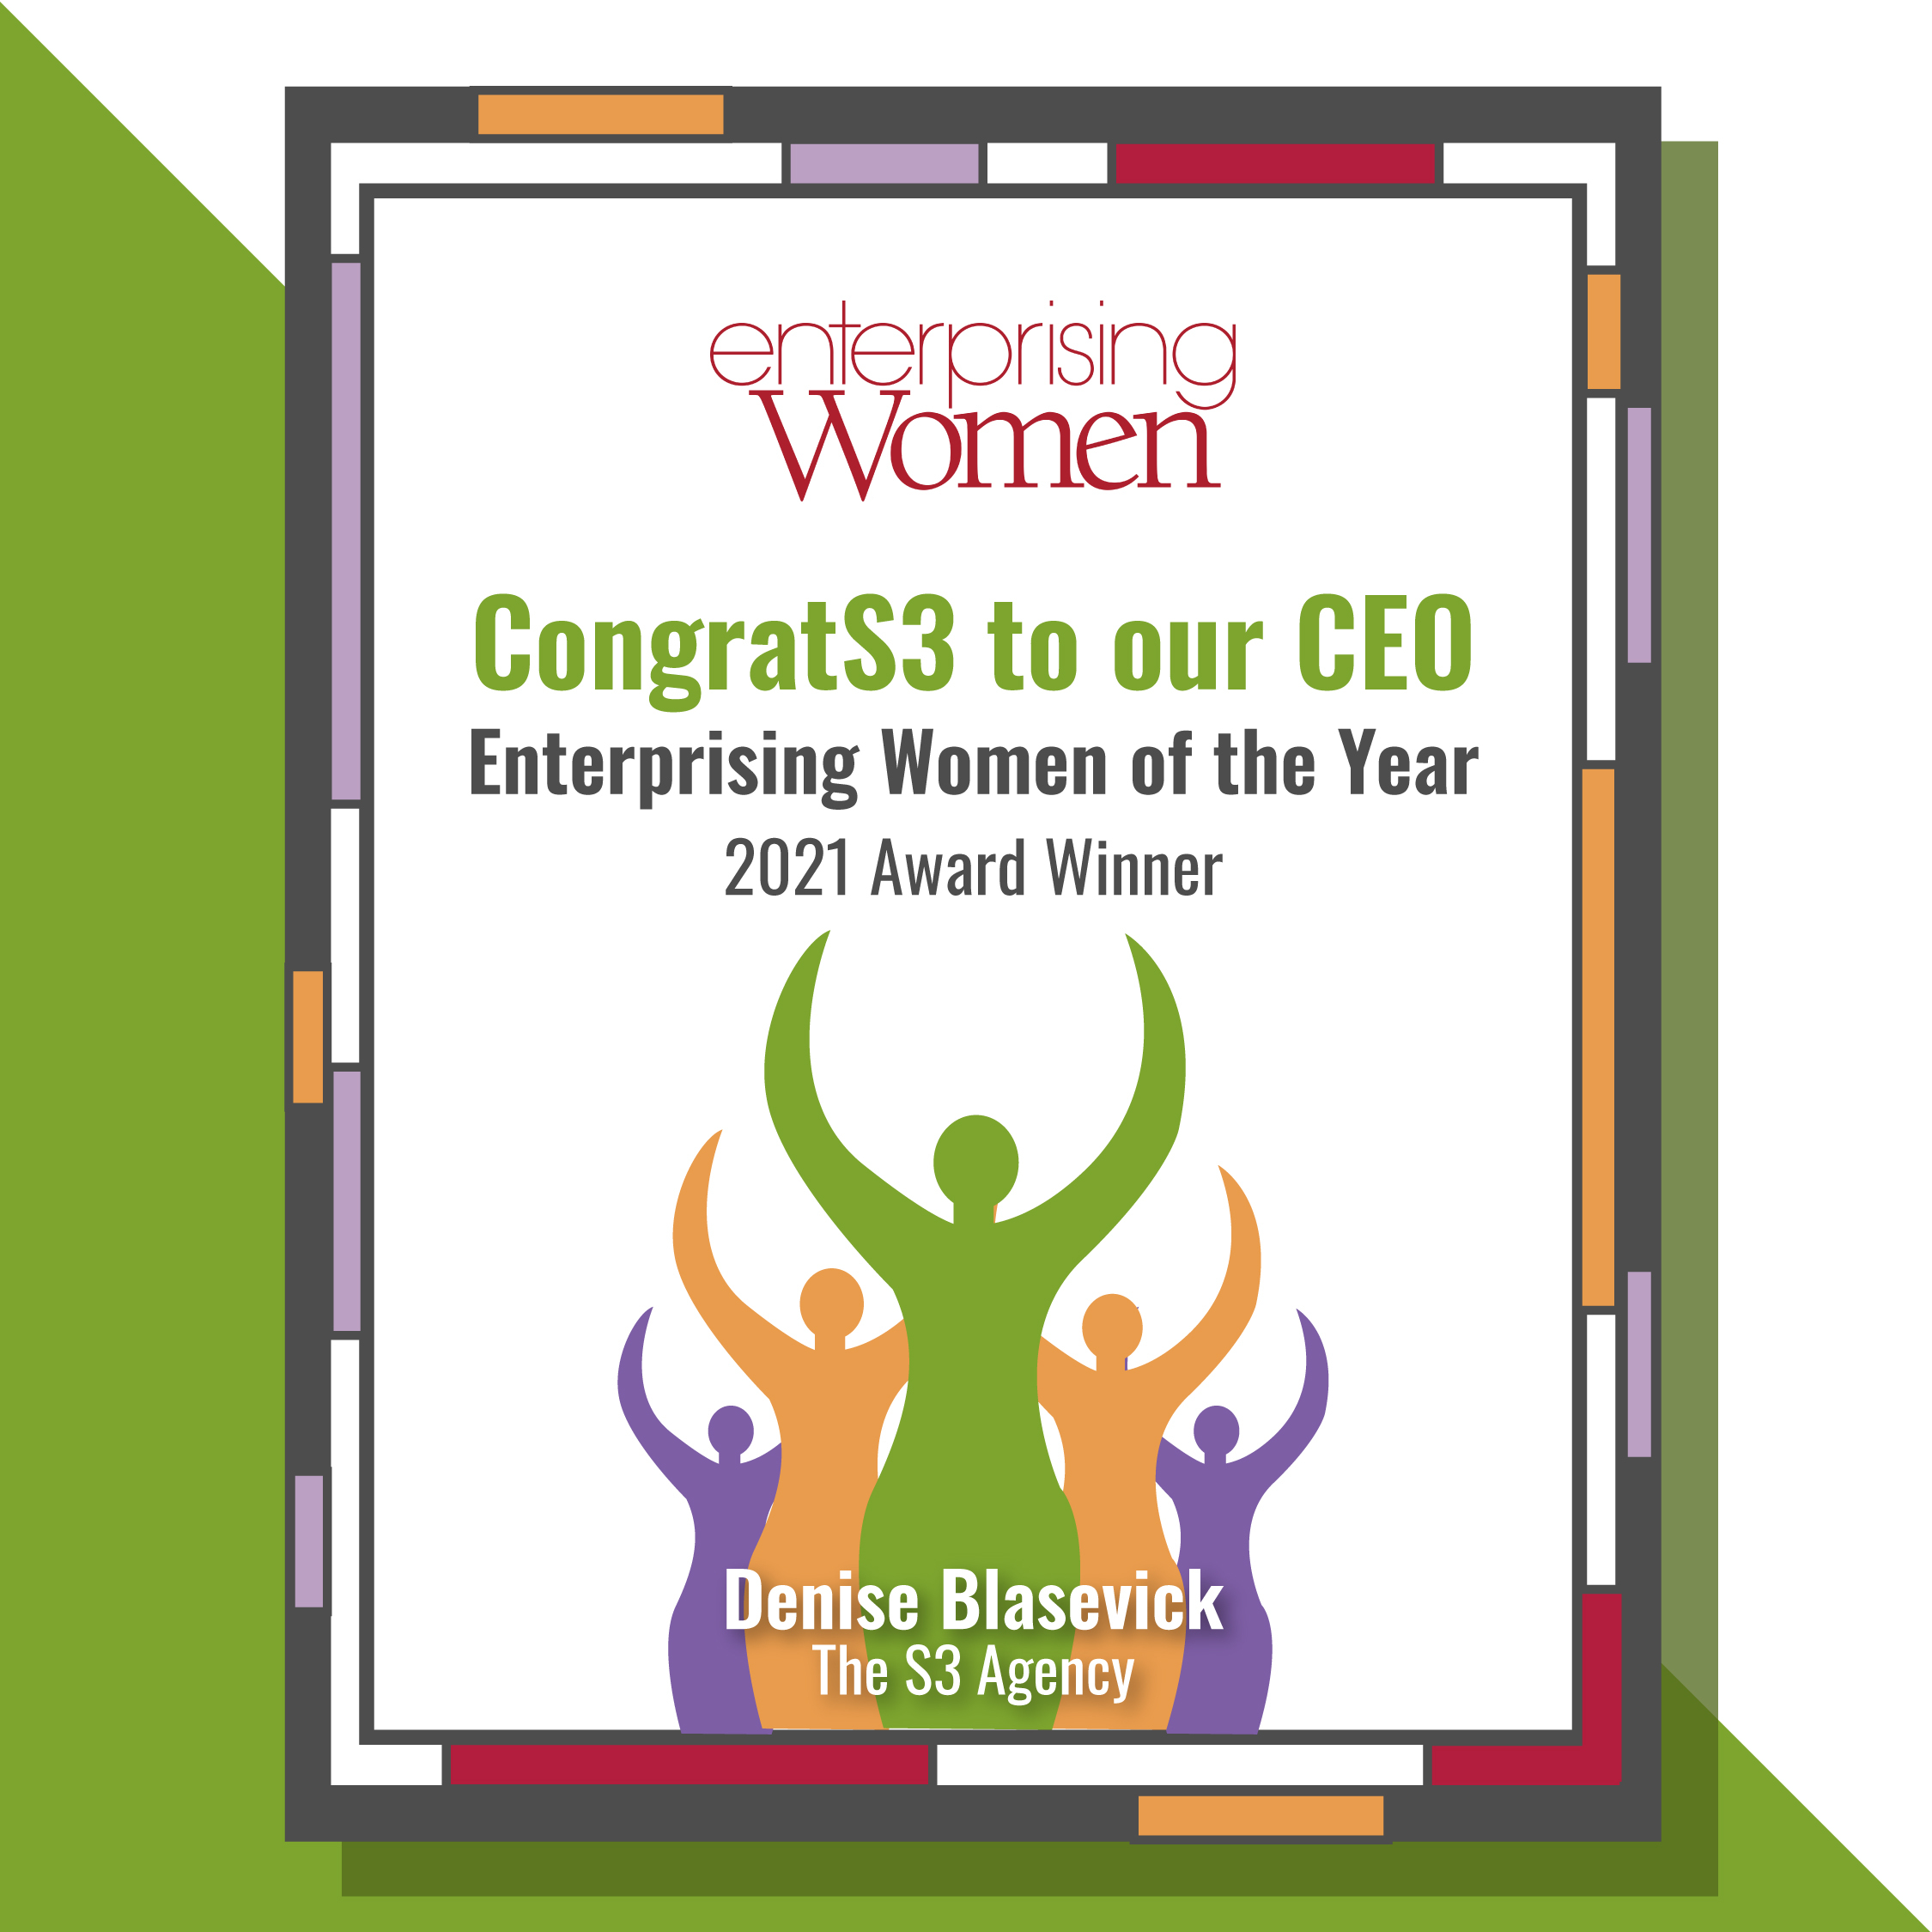 CongratS3 to our CEO: Enterprising Women of the Year Award Winner!